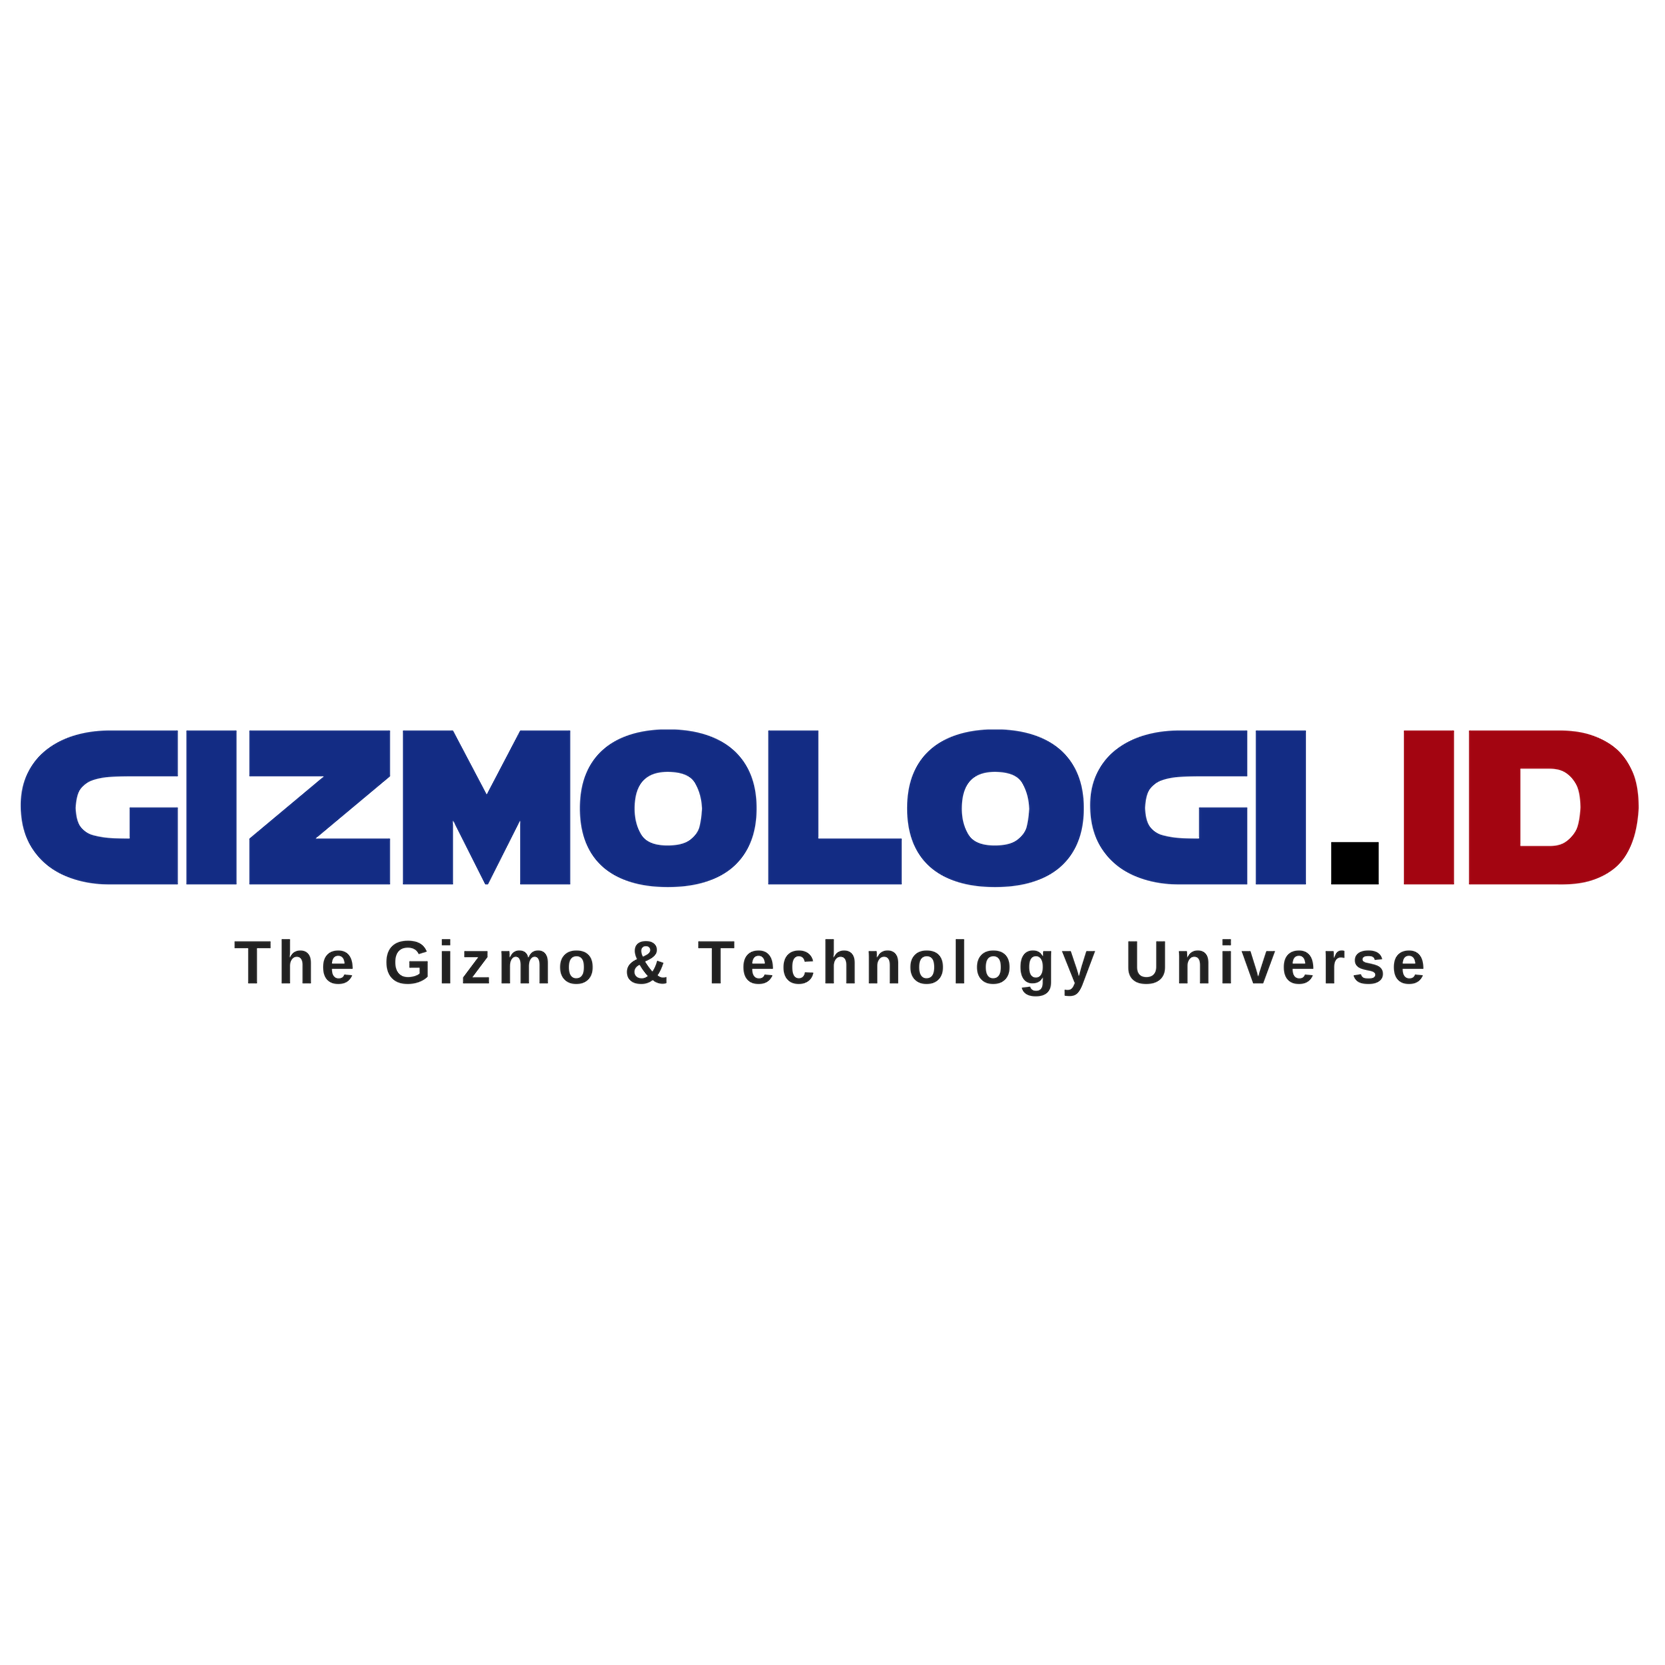 Media Review - Gizmologi